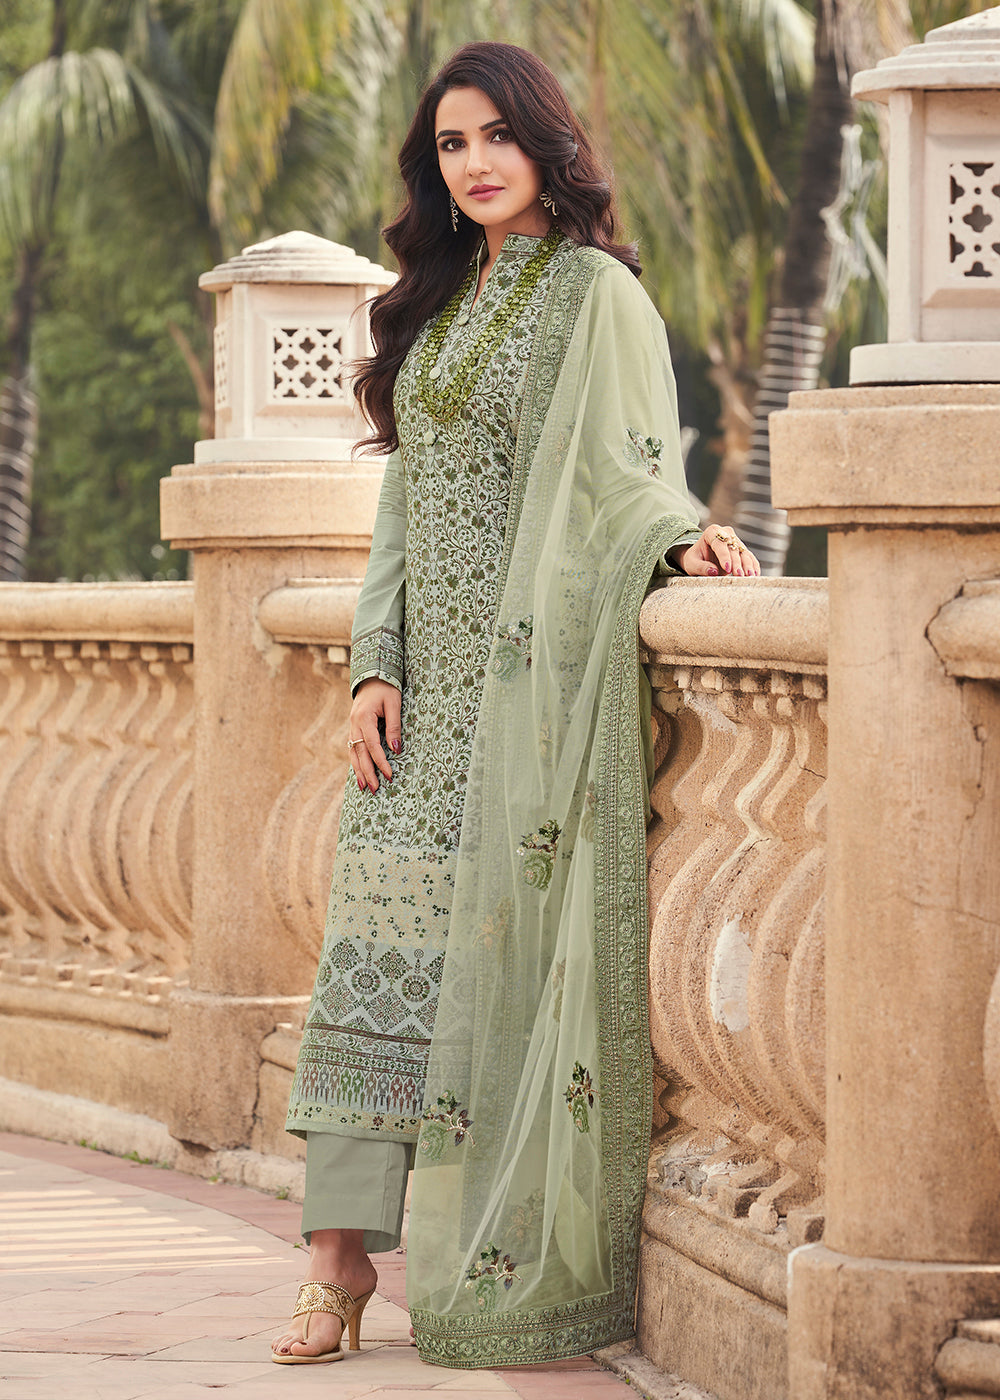 Punjabi Wedding Wear Women's Heavy Worked Salwar Kameez Patiyala Dupatta  Suits | eBay